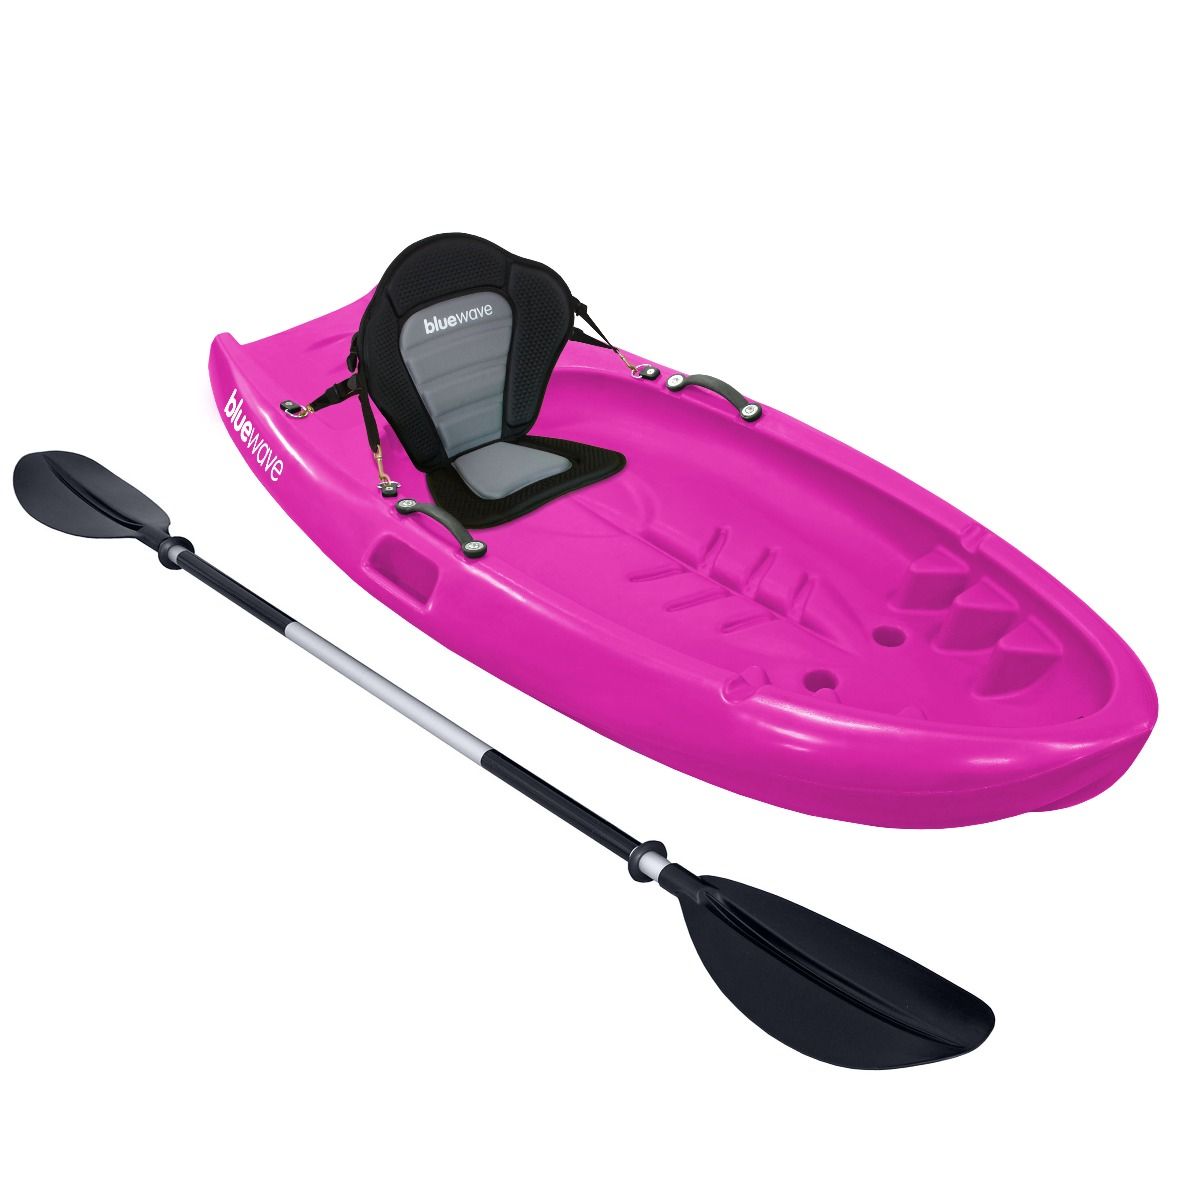 https://bluewavekayaks.com/media/catalog/product/cache/62a304575f3acfdb7bacfa8c9ec00a11/k/a/kayak-gk26-pk-pinkchair_new.jpg